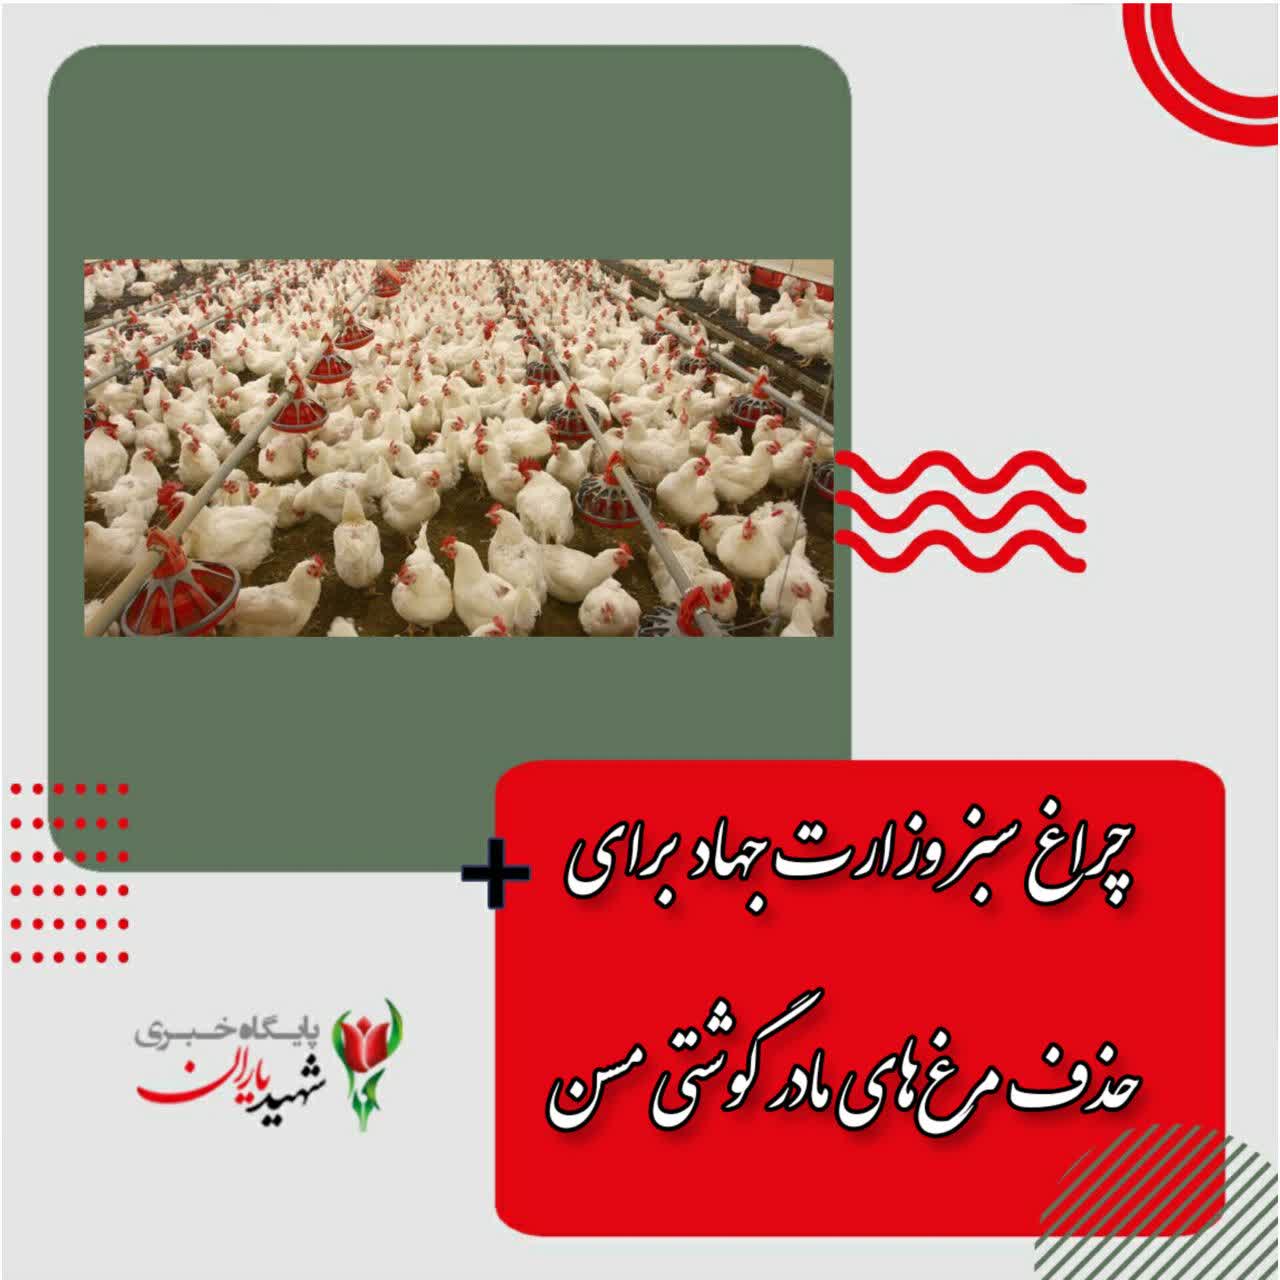 وزارت جهاد کشاورزی اعلام کرده :